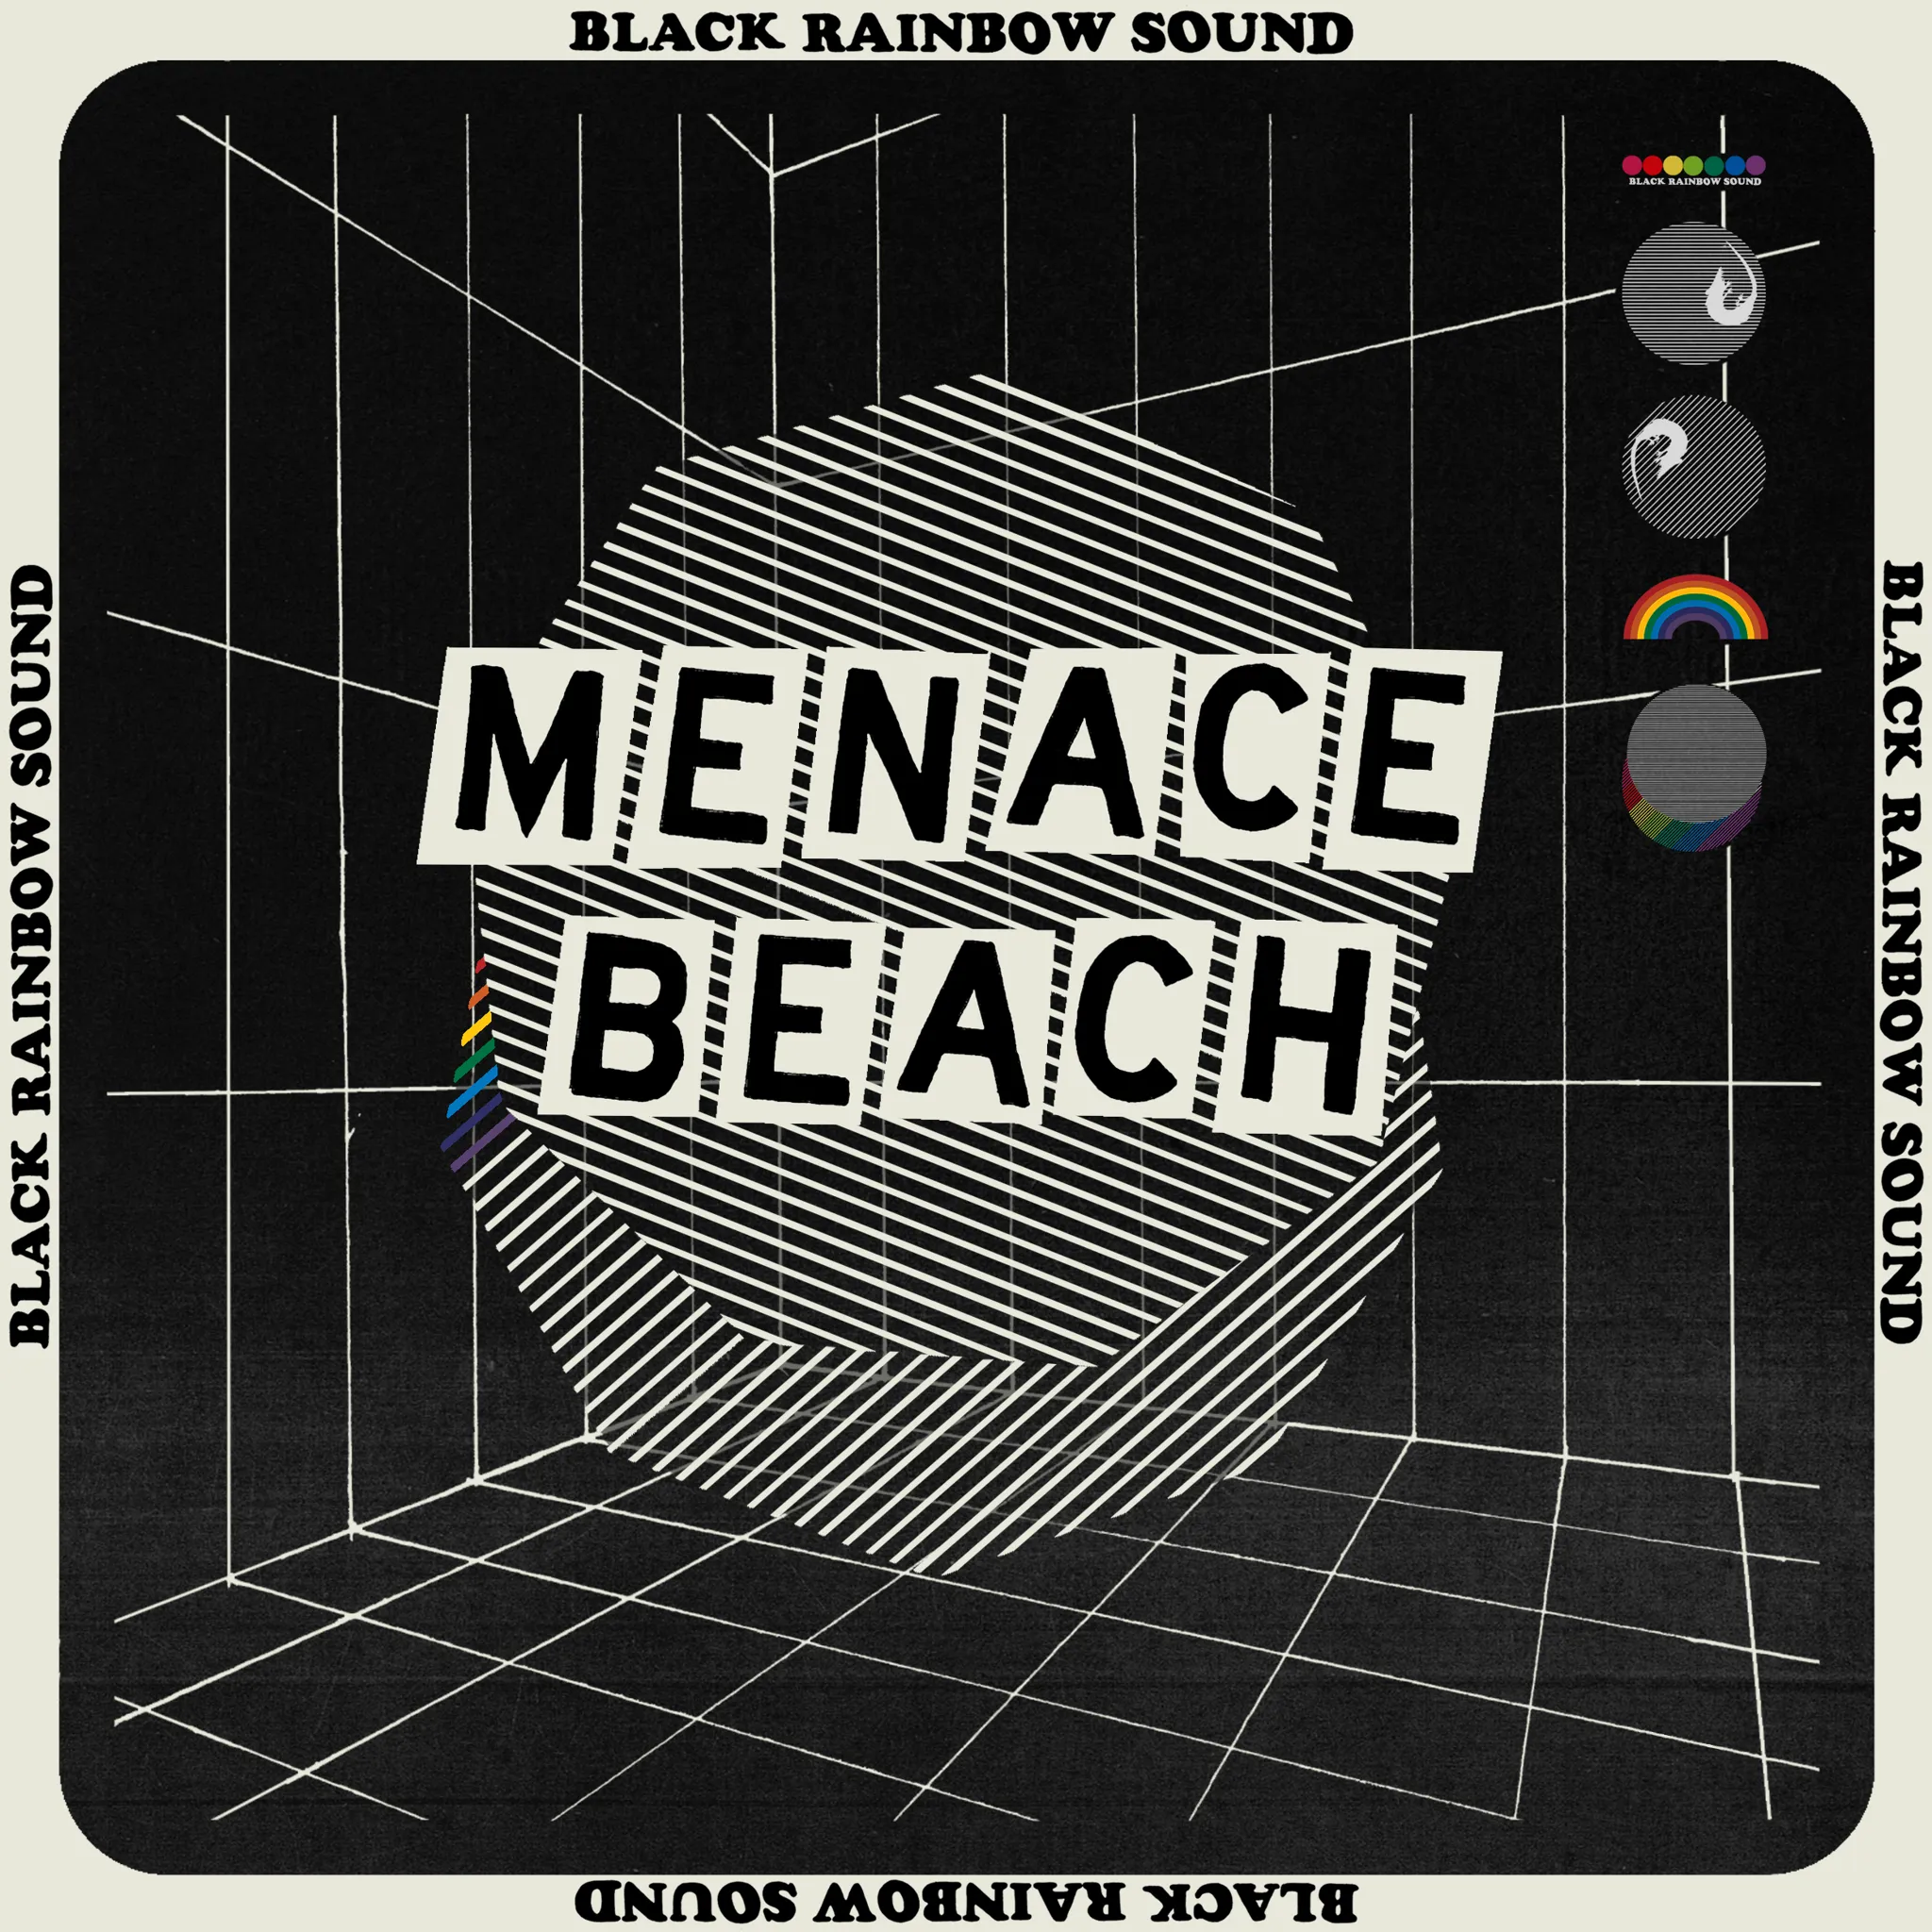 <strong>Menace Beach - Black Rainbow Sound</strong> (Vinyl LP - black)